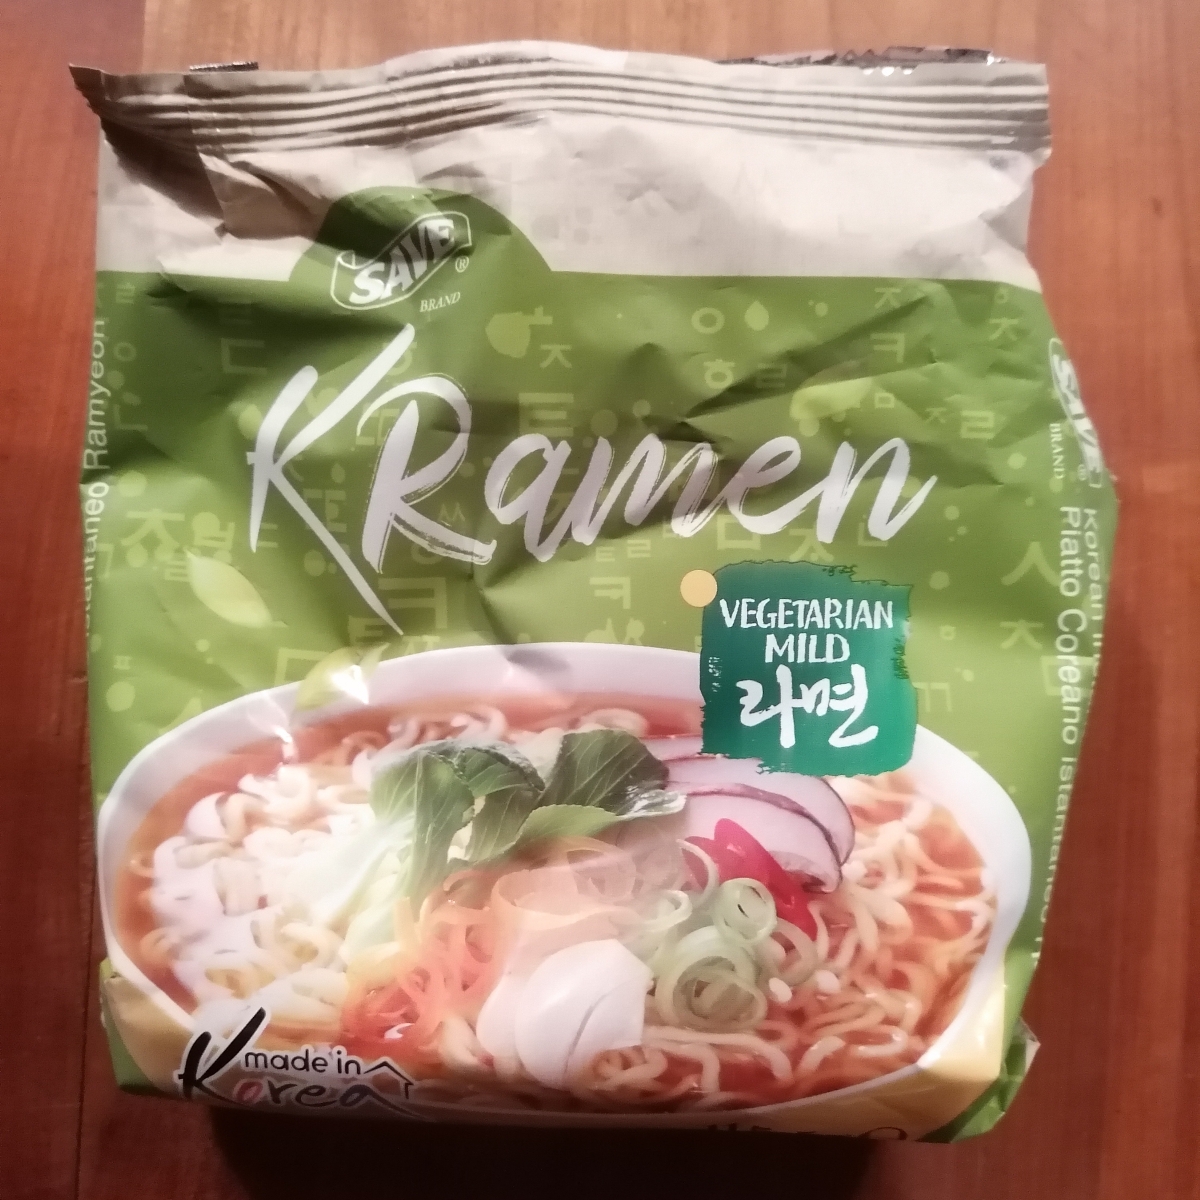 Save K Ramen - Vegetarian Mild Review